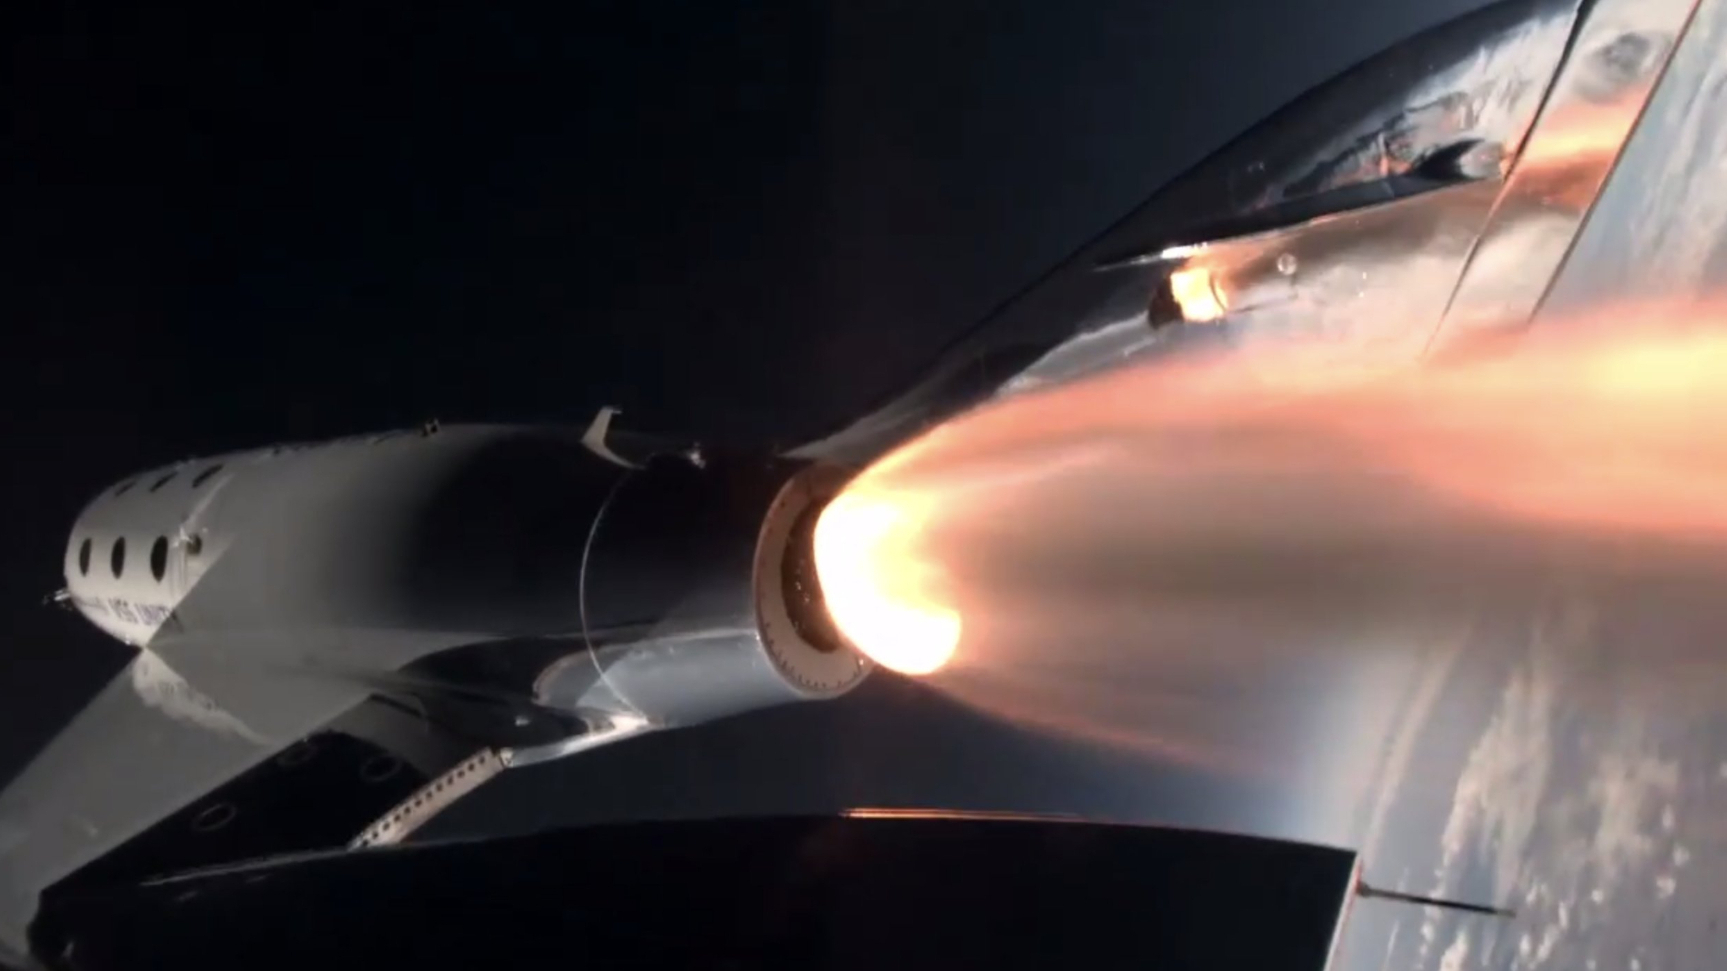 Watch an awe-inspiring video from final flight of Virgin Galactic’s VSS Unity spaceplane Space